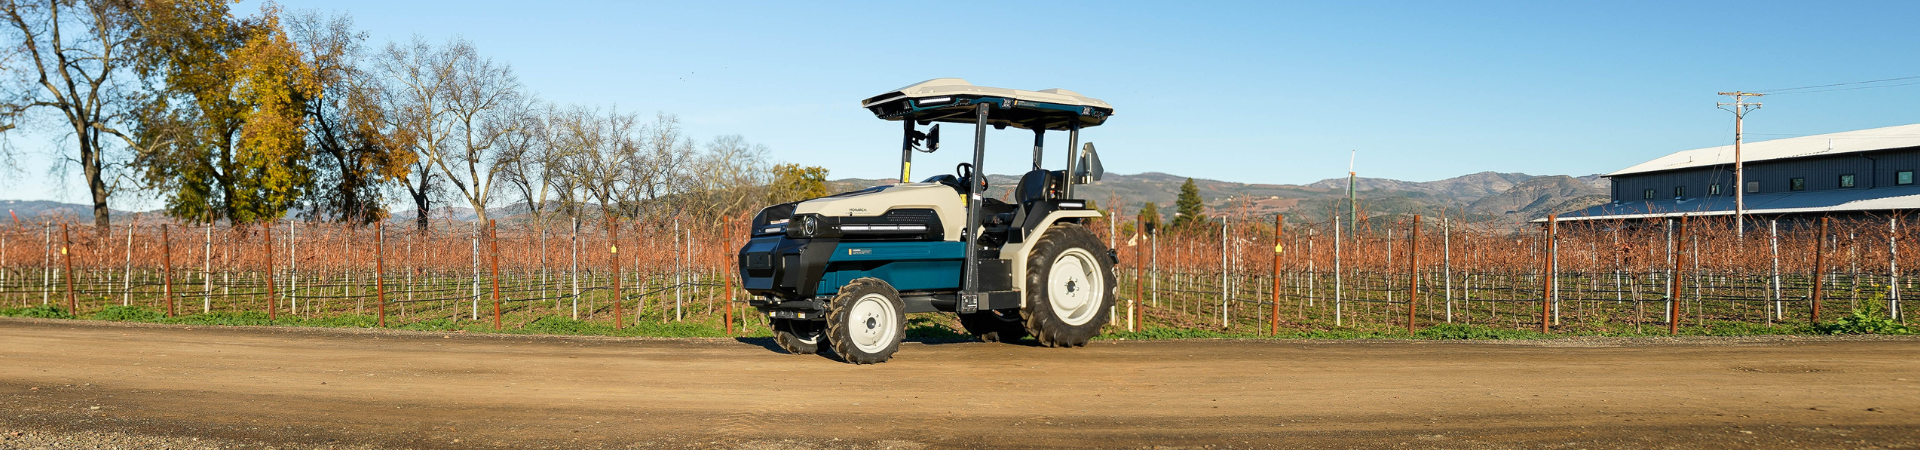 Monarch Tractor Announces MK-V Smart Tractor Price Update